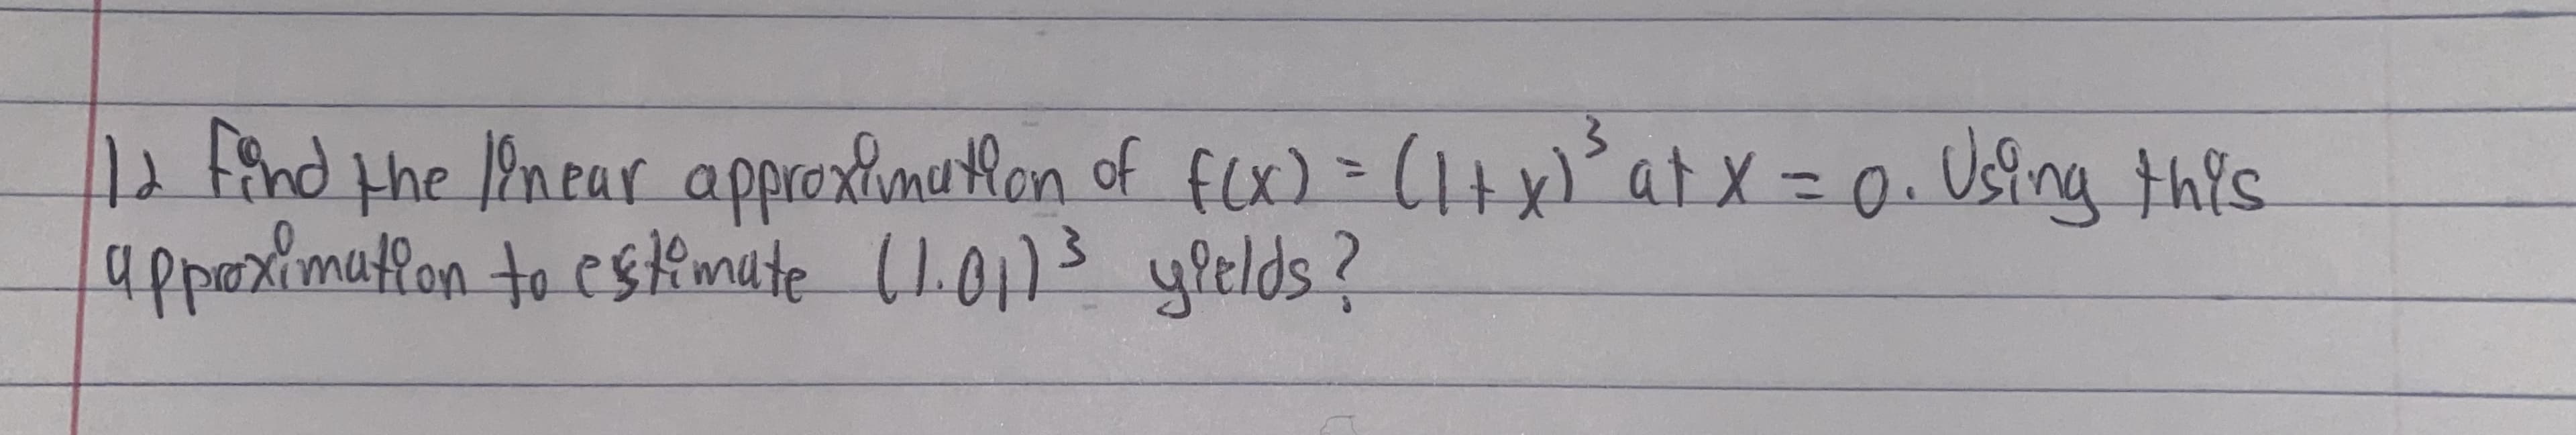 12 find the 1Pnear approxtimutlon of fCx)=(1+x
)° atX=D0.
Using this
apporimatlon te cskamilte (1.01)3 ylelds?
(10113 yeelds?
